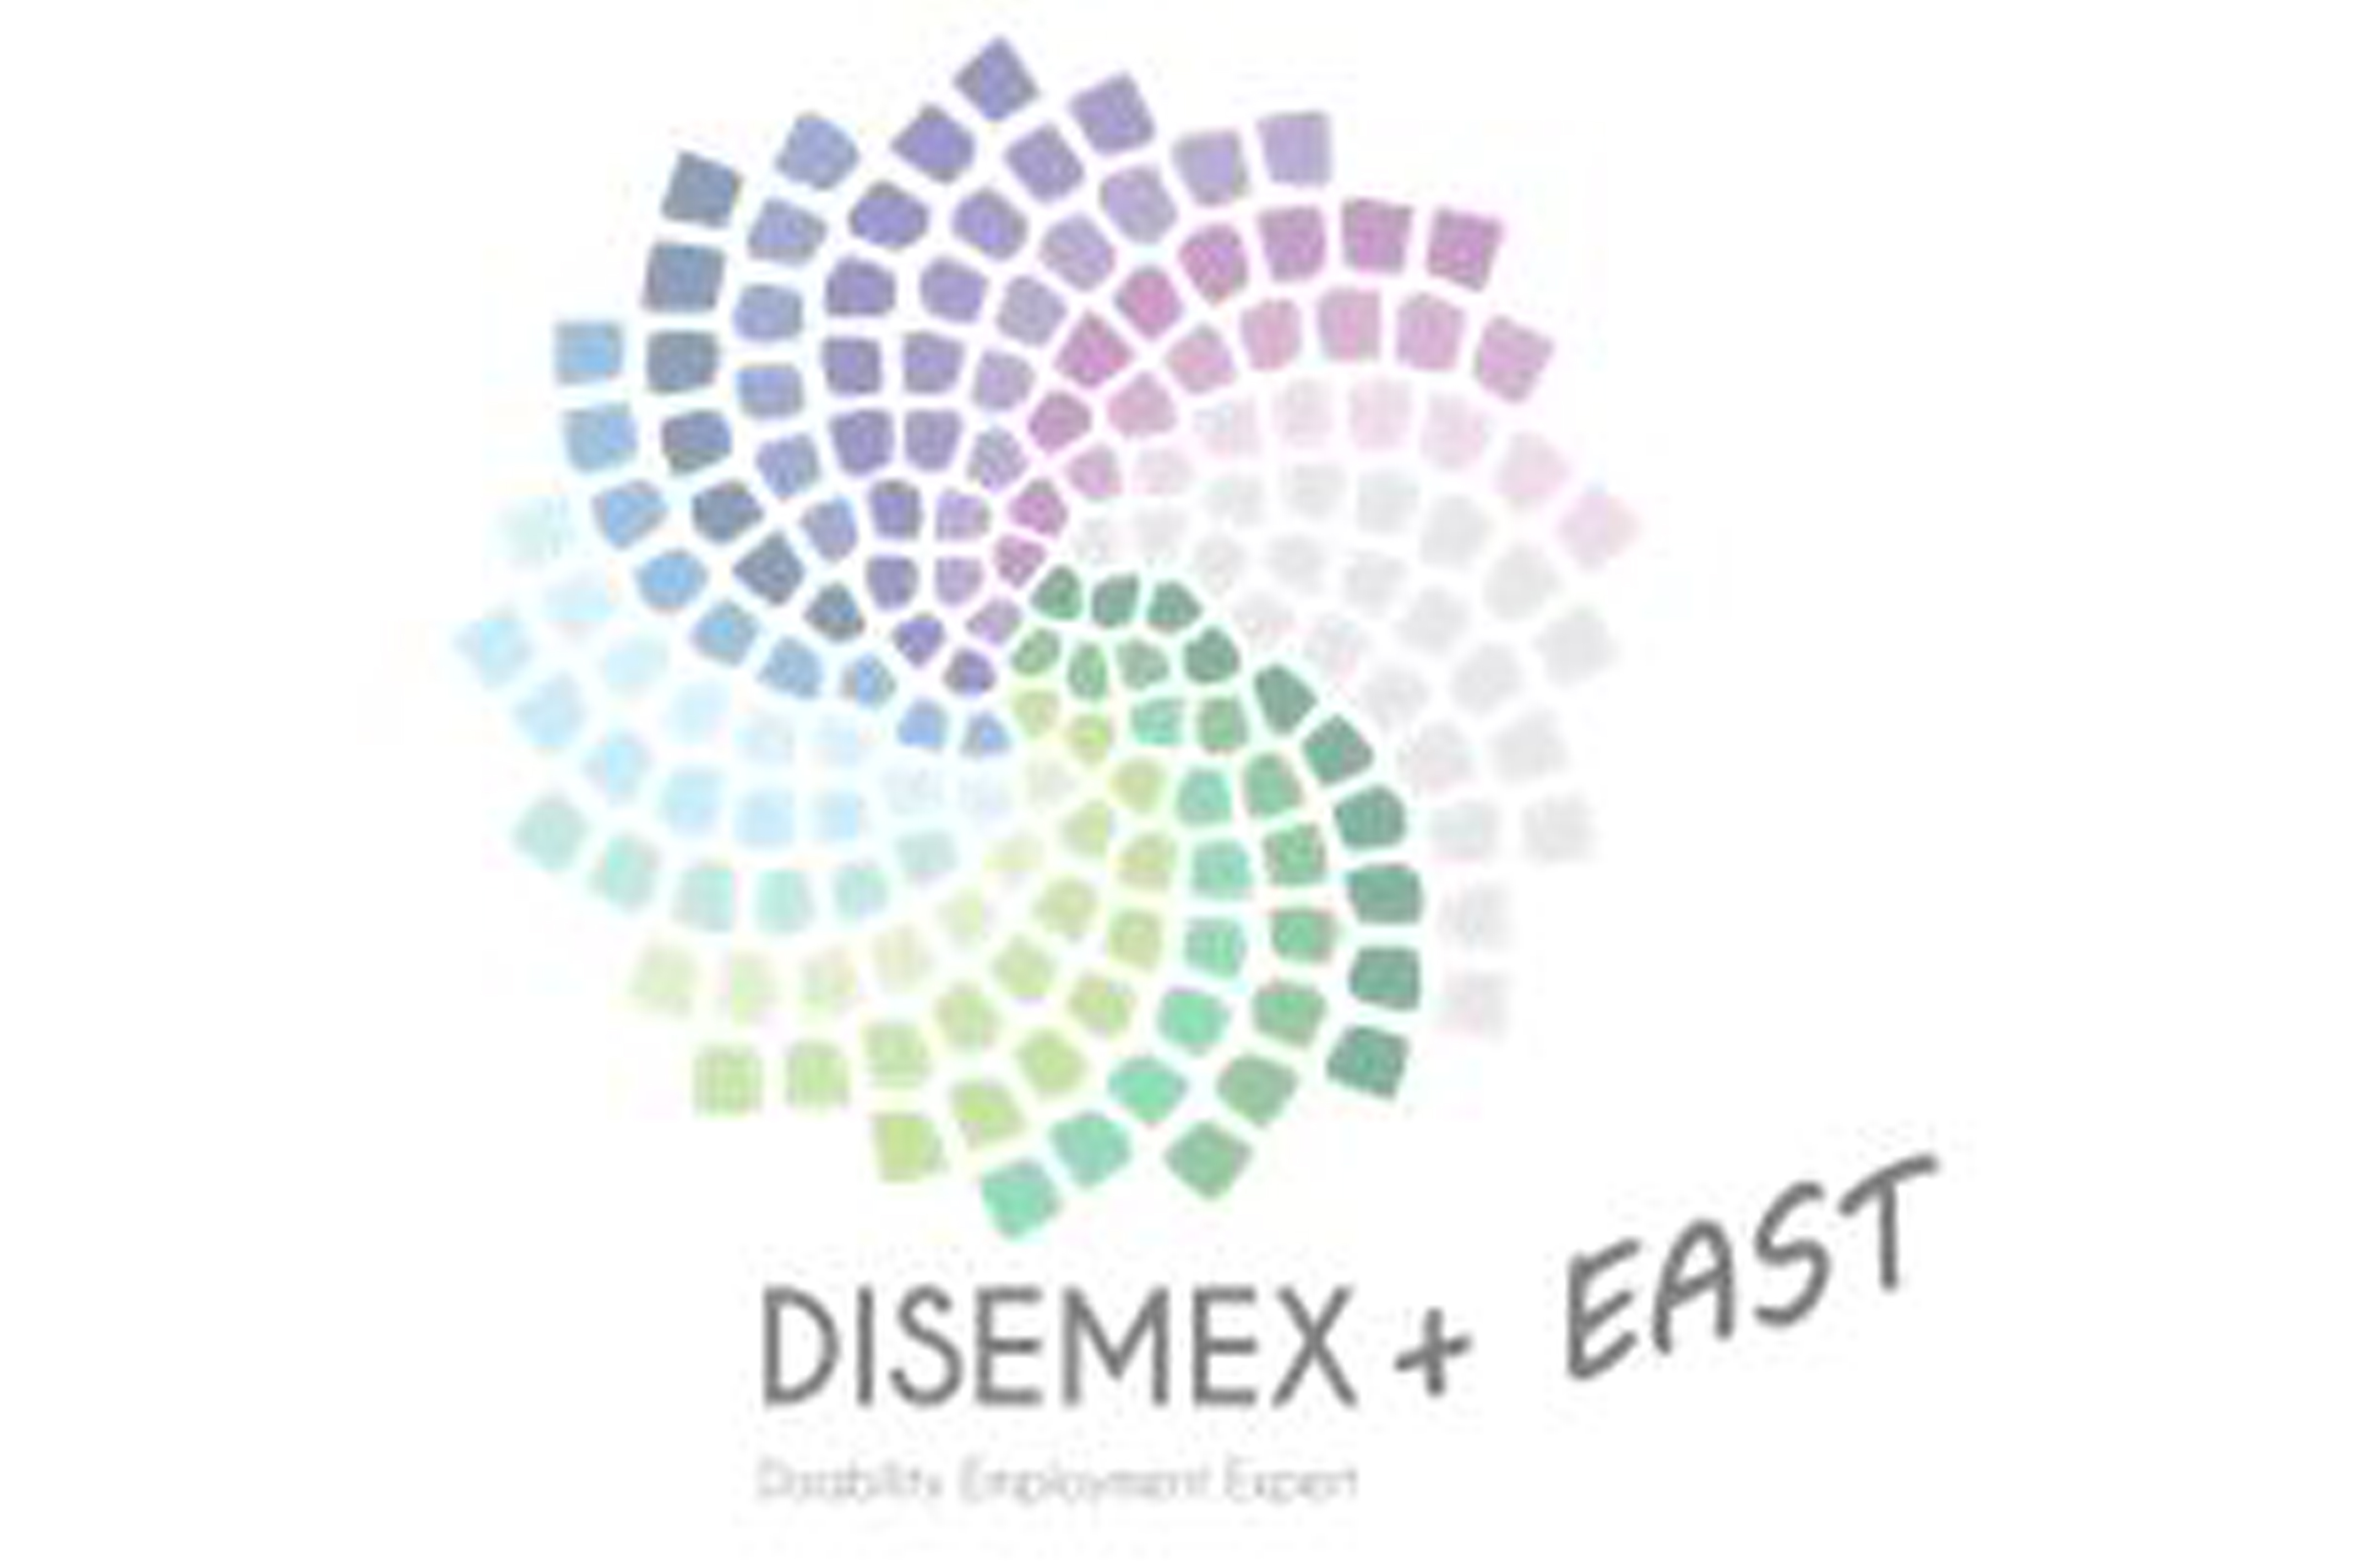 DISEMEX + EAST: Neues Inklusionsprojekt ist gestartet